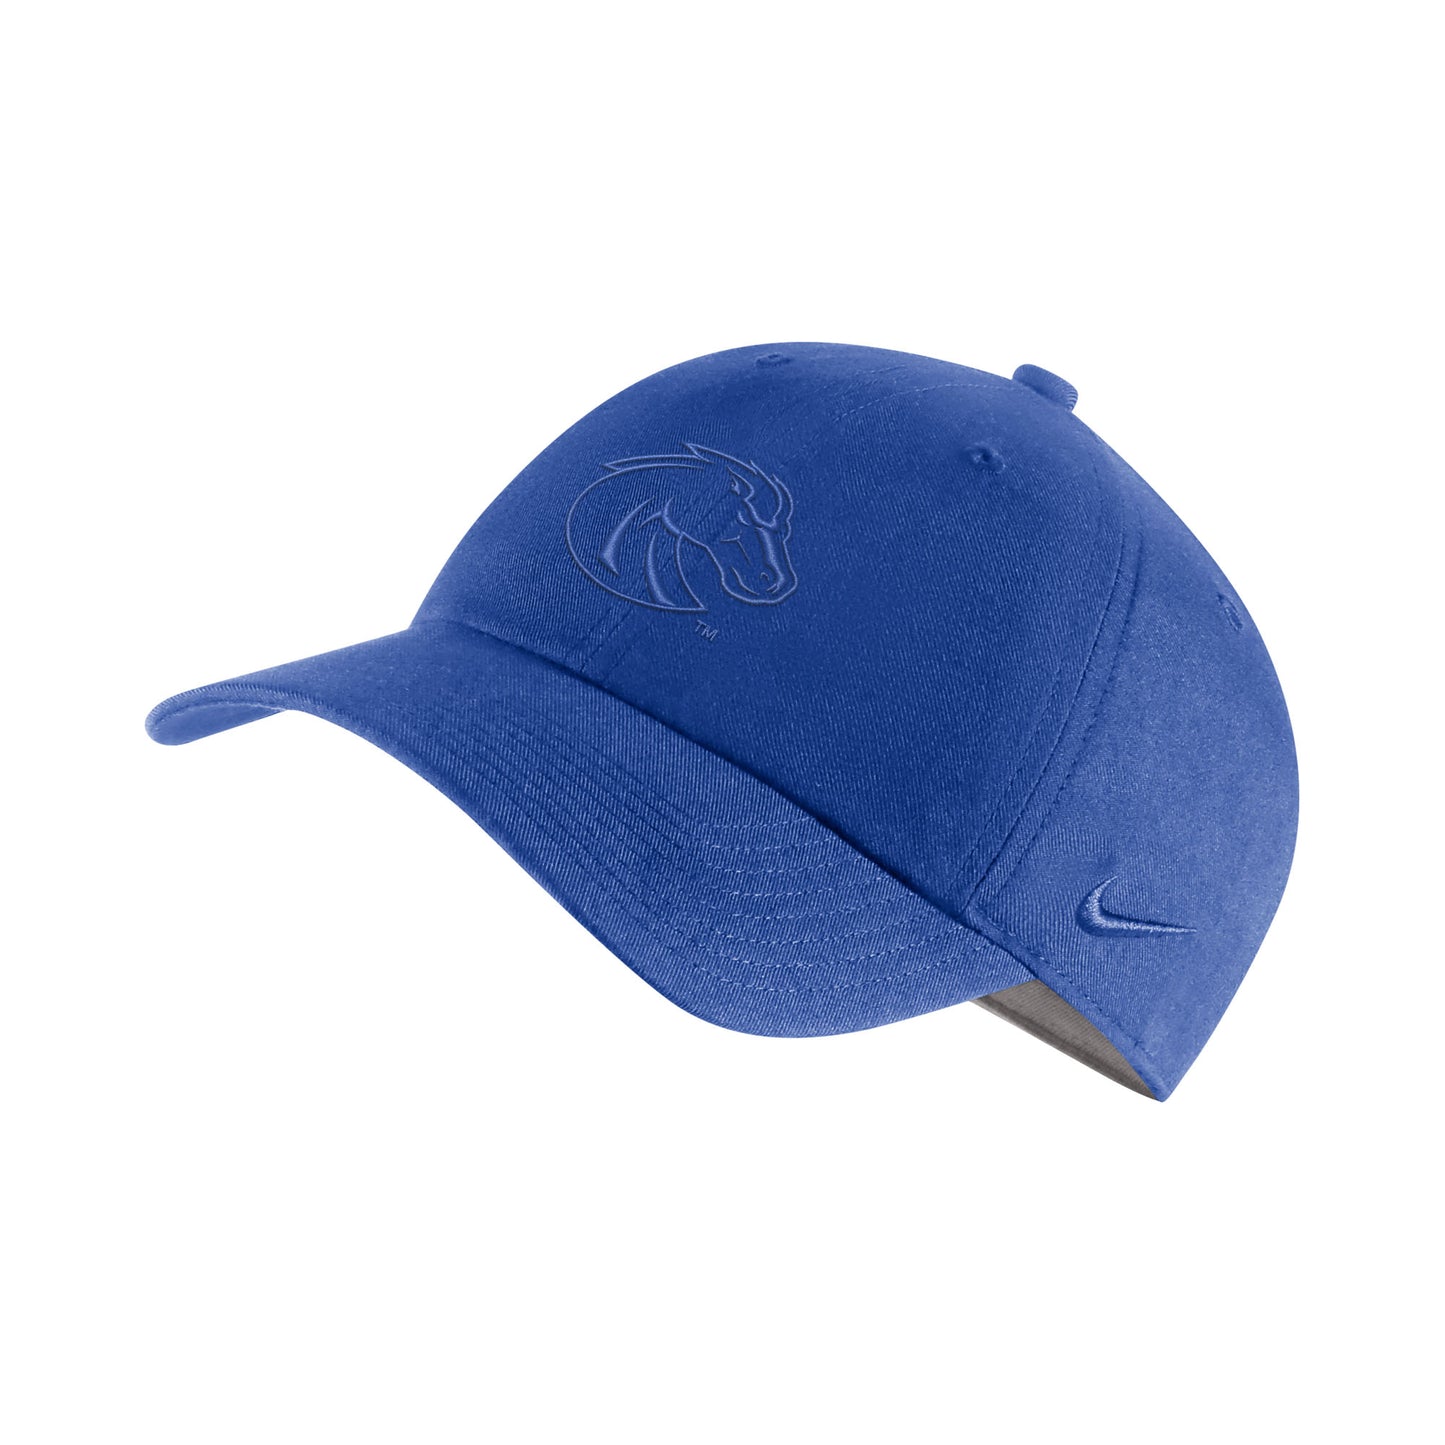 Boise State Broncos Nike Heritage86 Adjustable Hat (Blue)